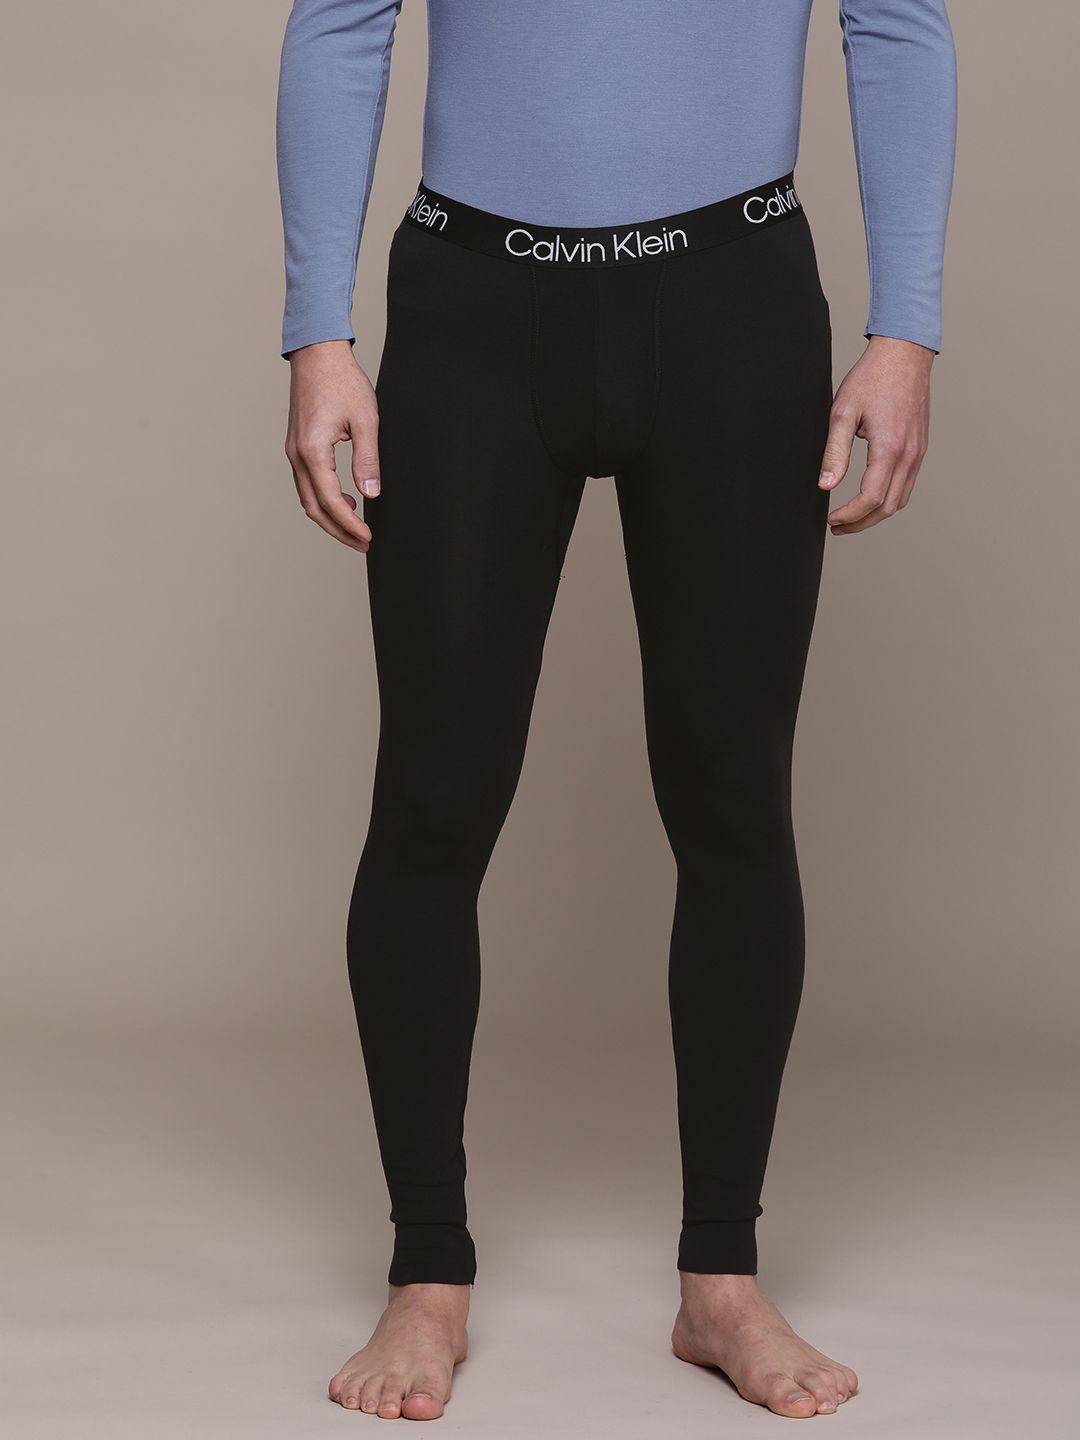 calvin-klein-underwear-men-black-solid-lounge-pants